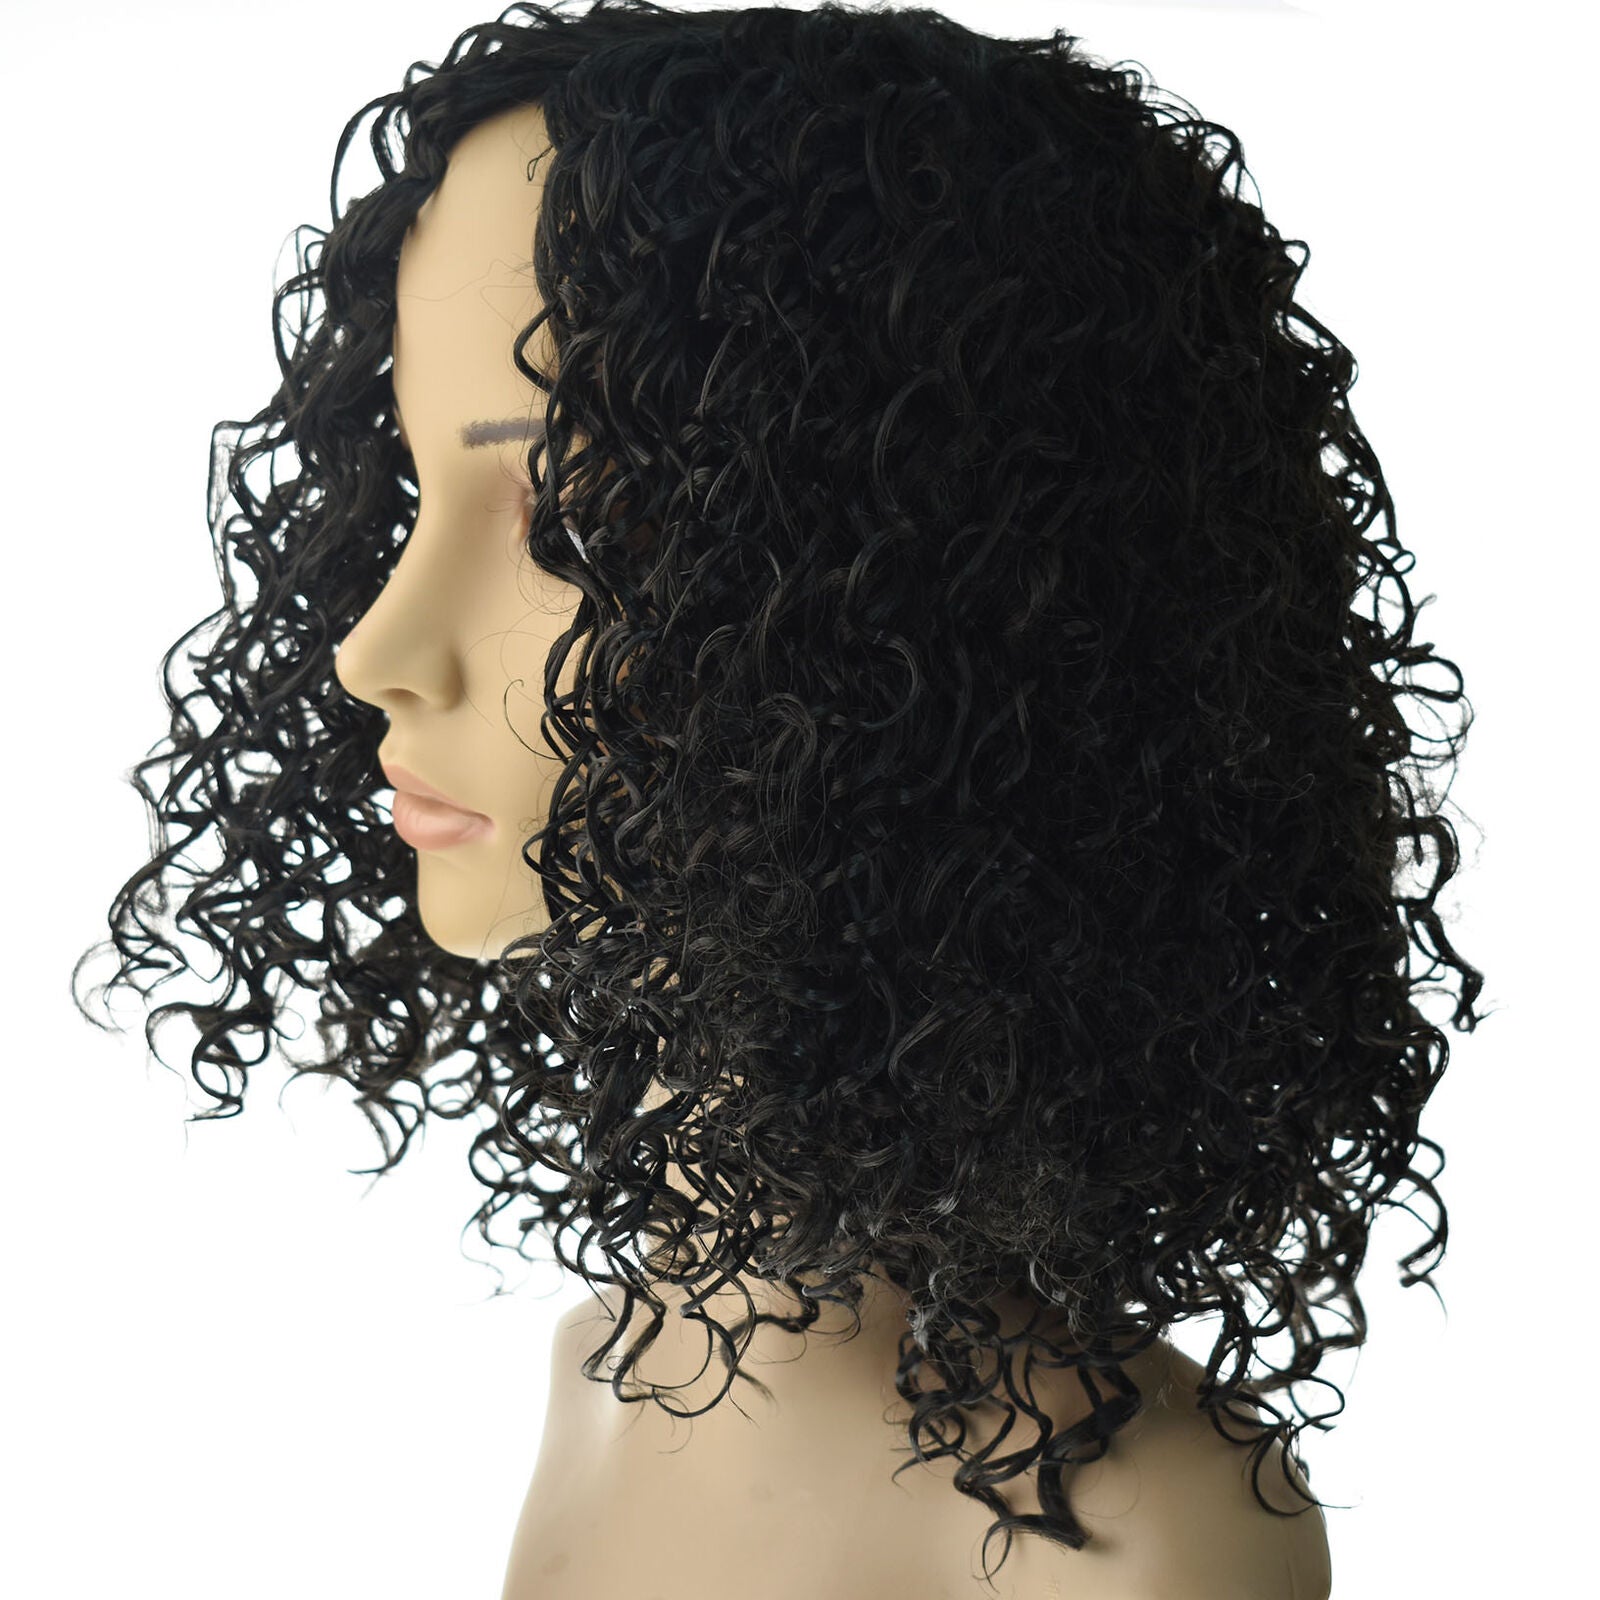 Women's Curly Wavy Short Wigs Dark Black Ladies Costume Synthetic Hair